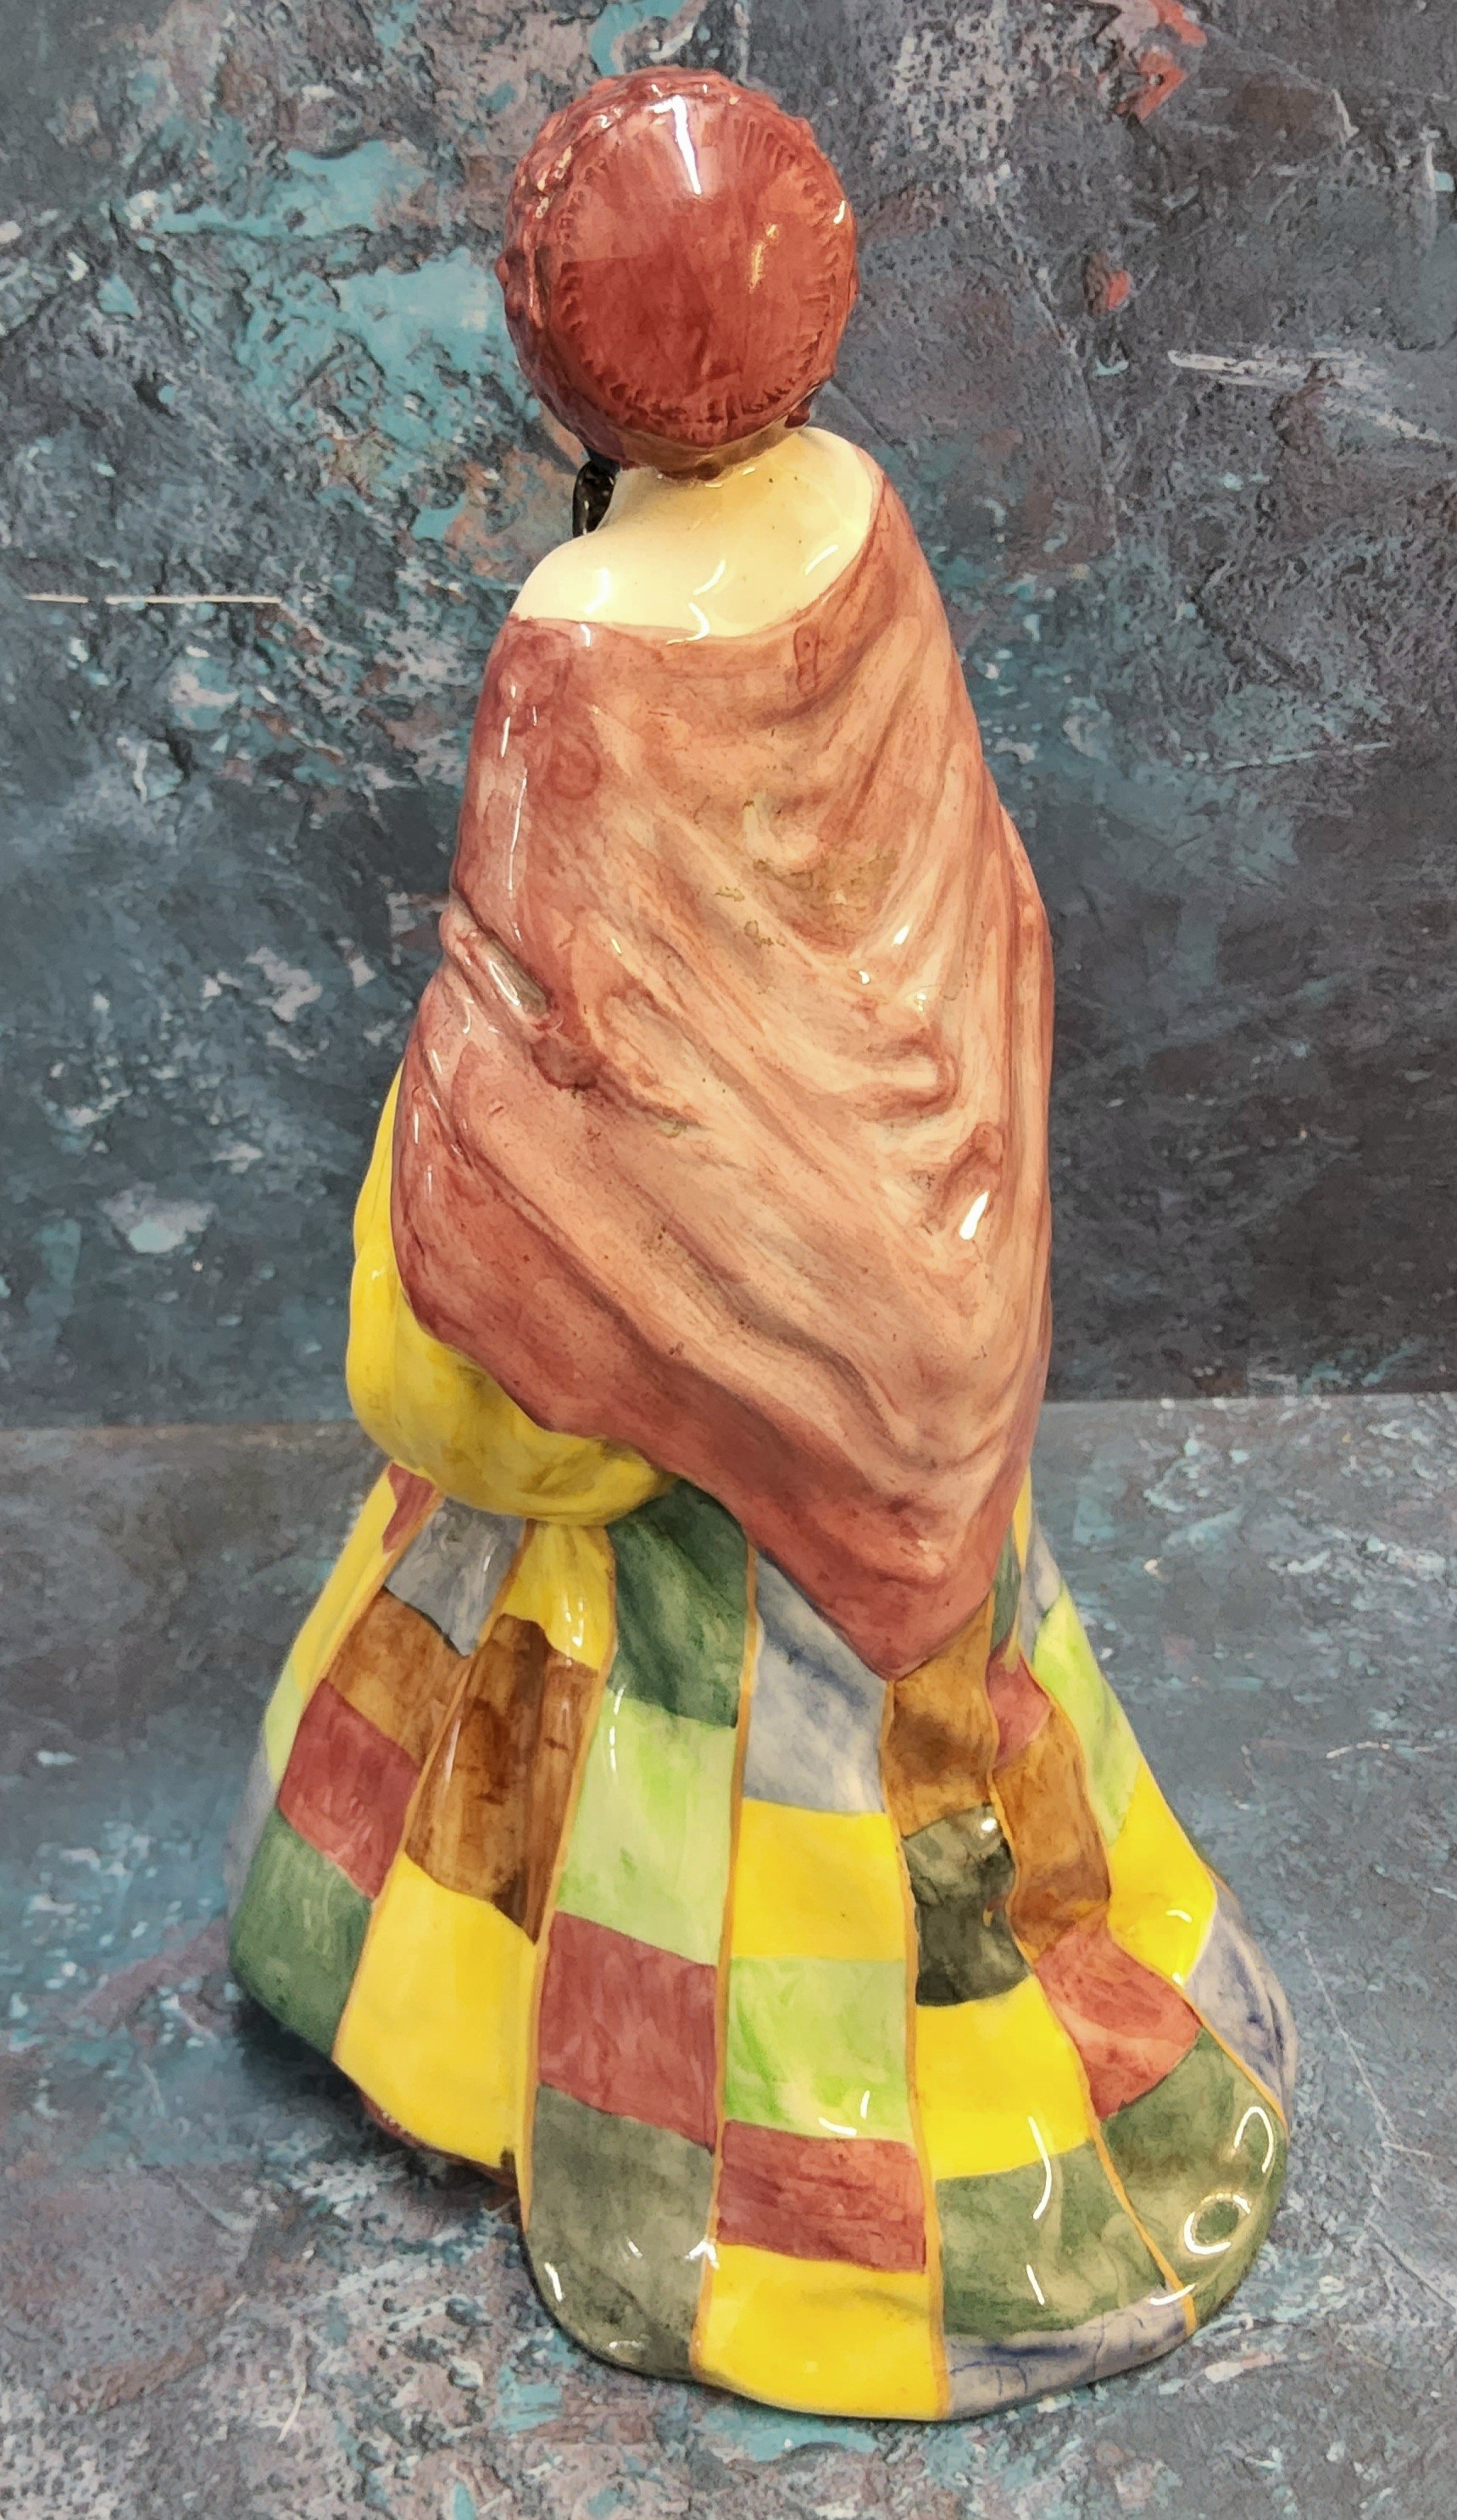 A Royal Doulton earthenware figure, Parson Daughter, designed by Leslie Harradine, 26cm high, - Image 2 of 3